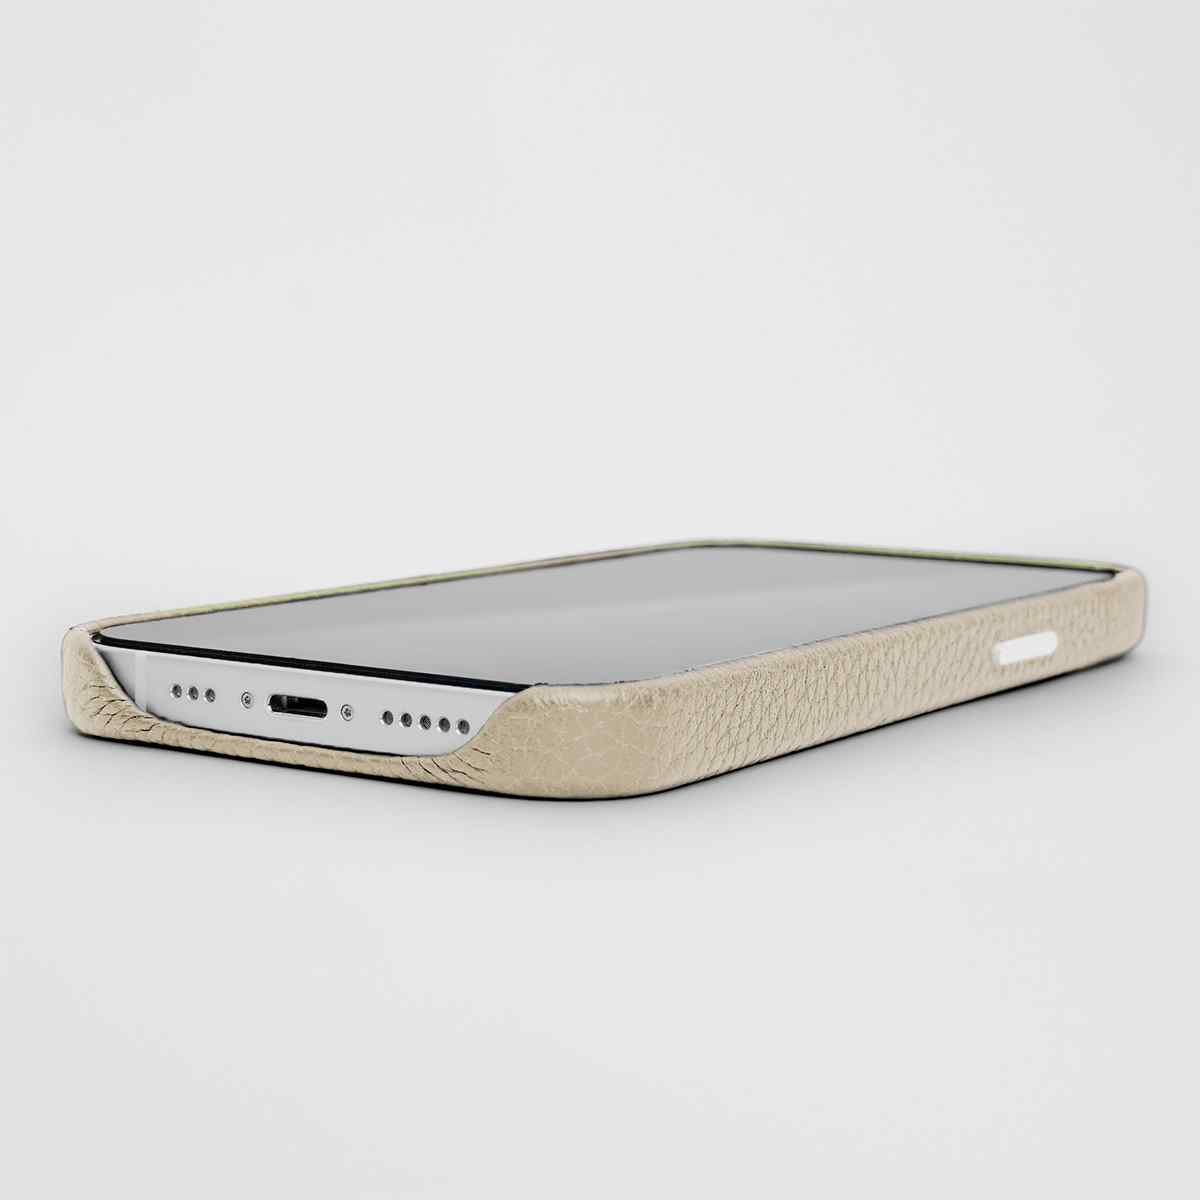 Grain Embossed Leather iPhone 13 Pro Max Case in Creamy White #color_creamy-white